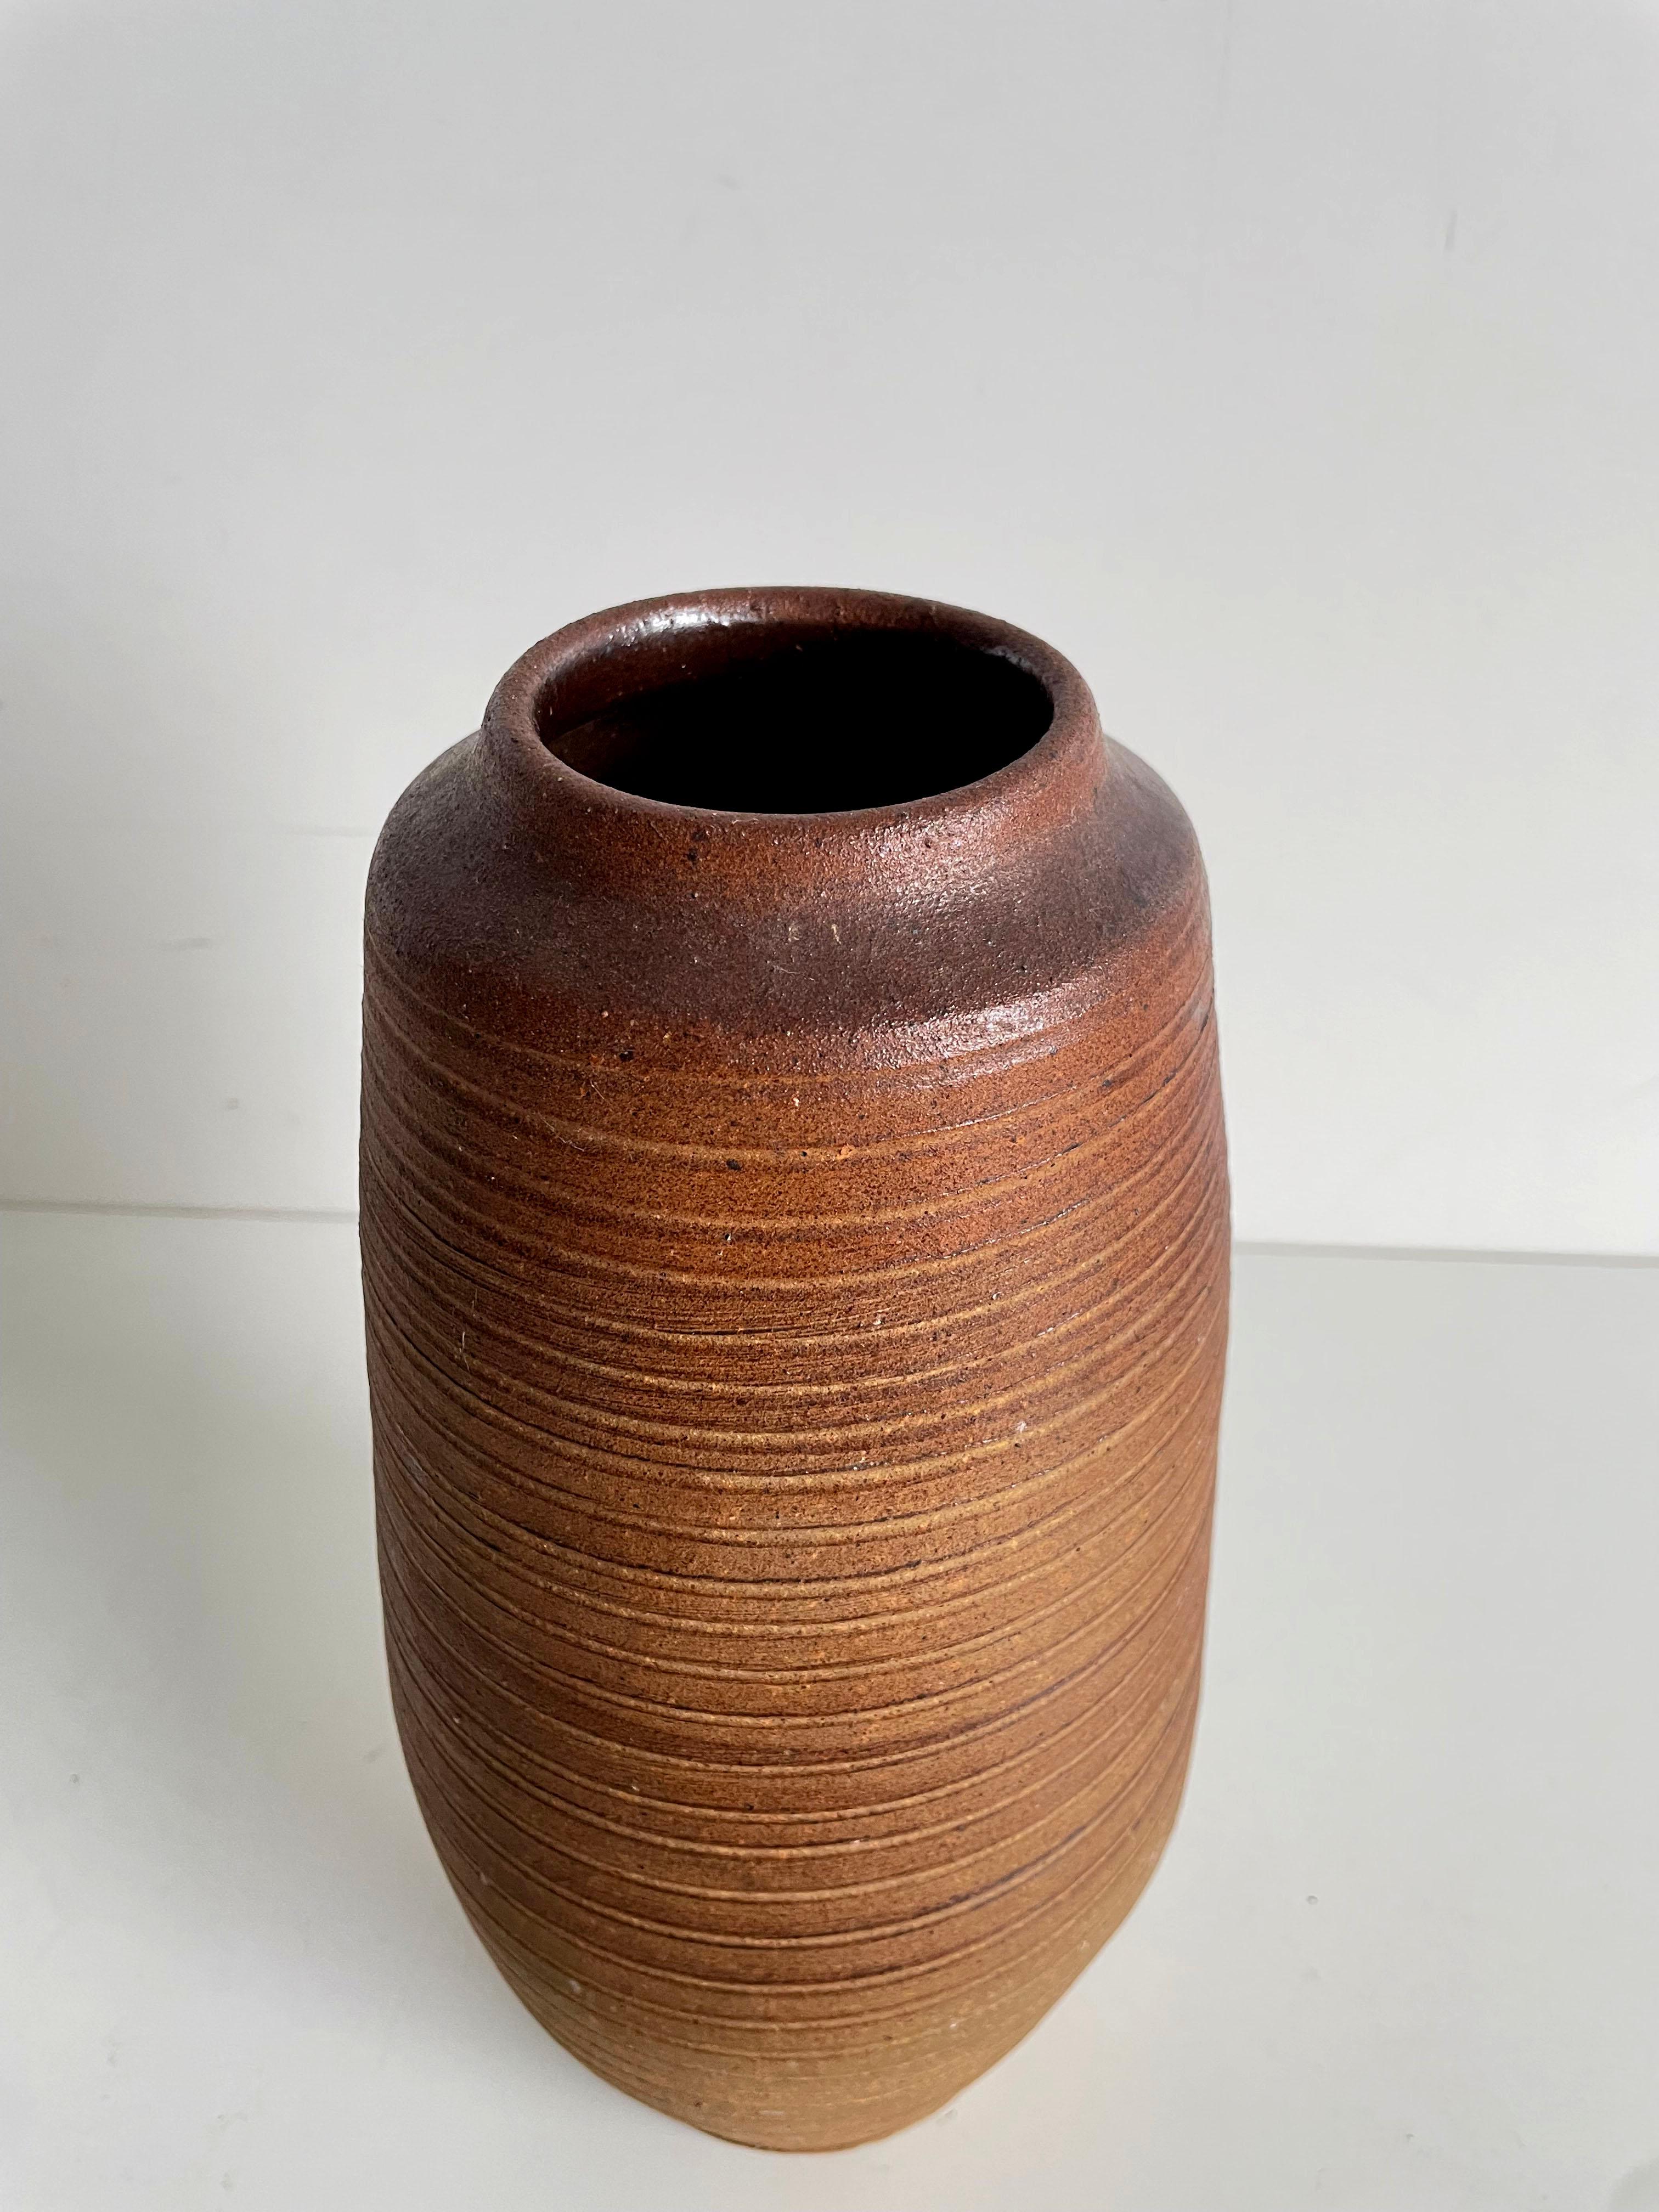 European Vintage Teracotta Vase with textured surface, Wabi Sabi, Studio Pottery, Marked For Sale